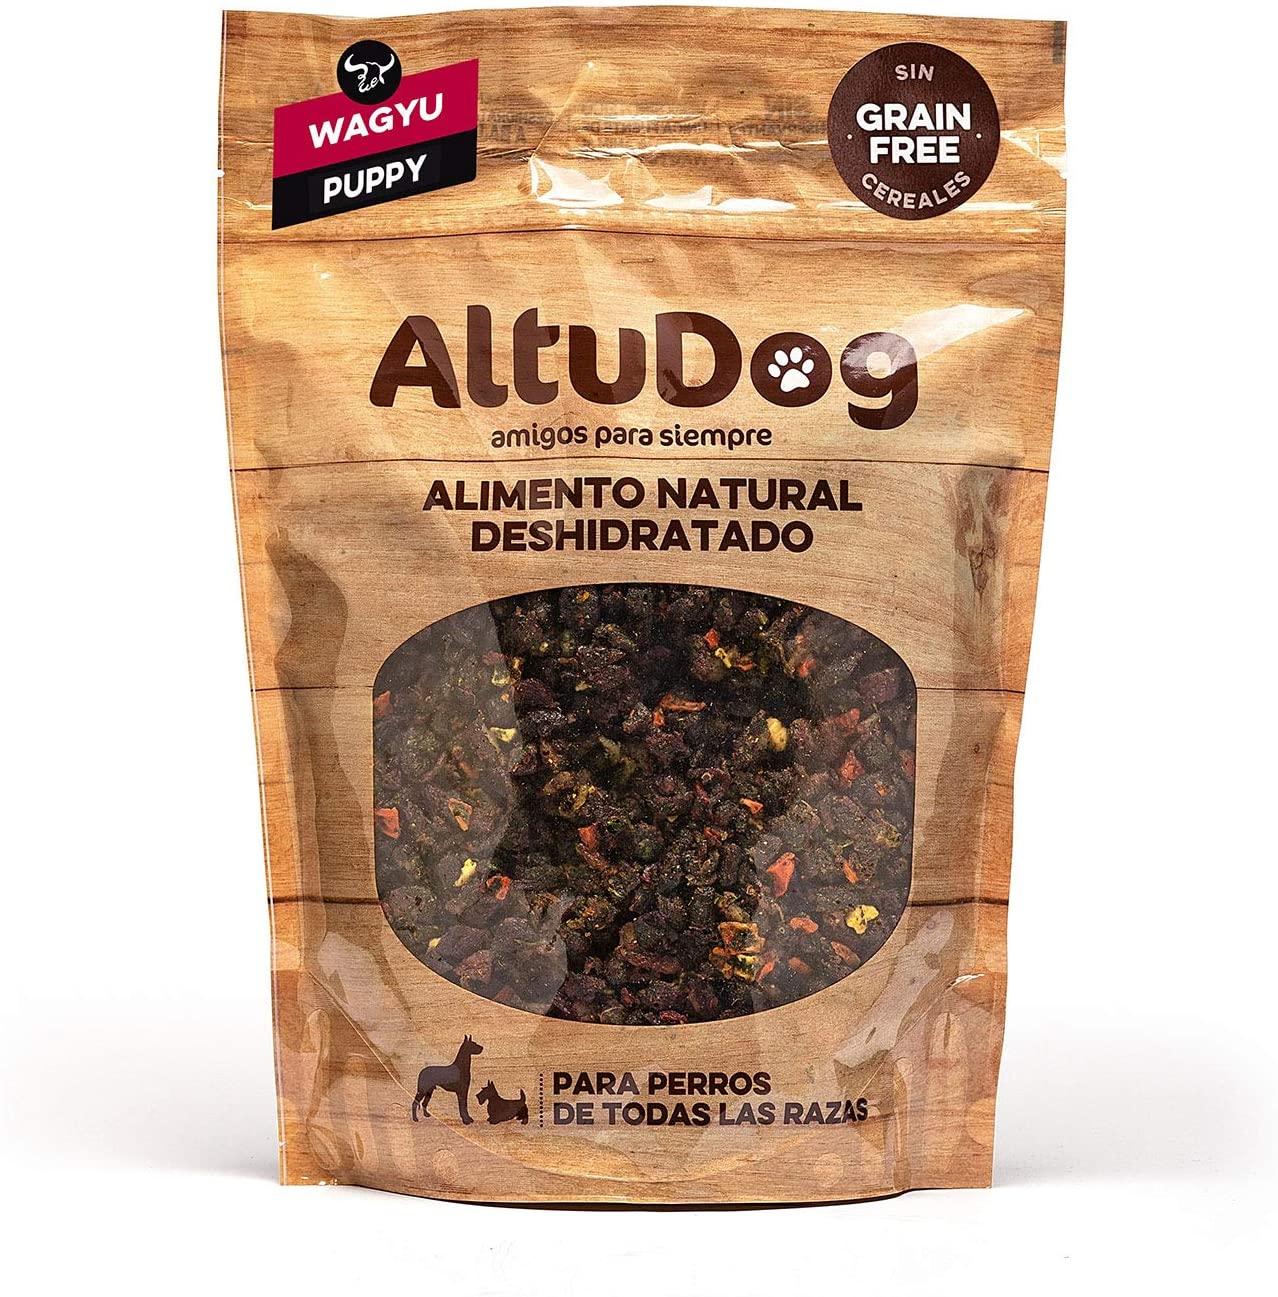  ALTUDOG Alimento Natural deshidratado para Cachorros Wagyu SIN Cereales Puppy 500g - Comida Natural para Perros (500g) 